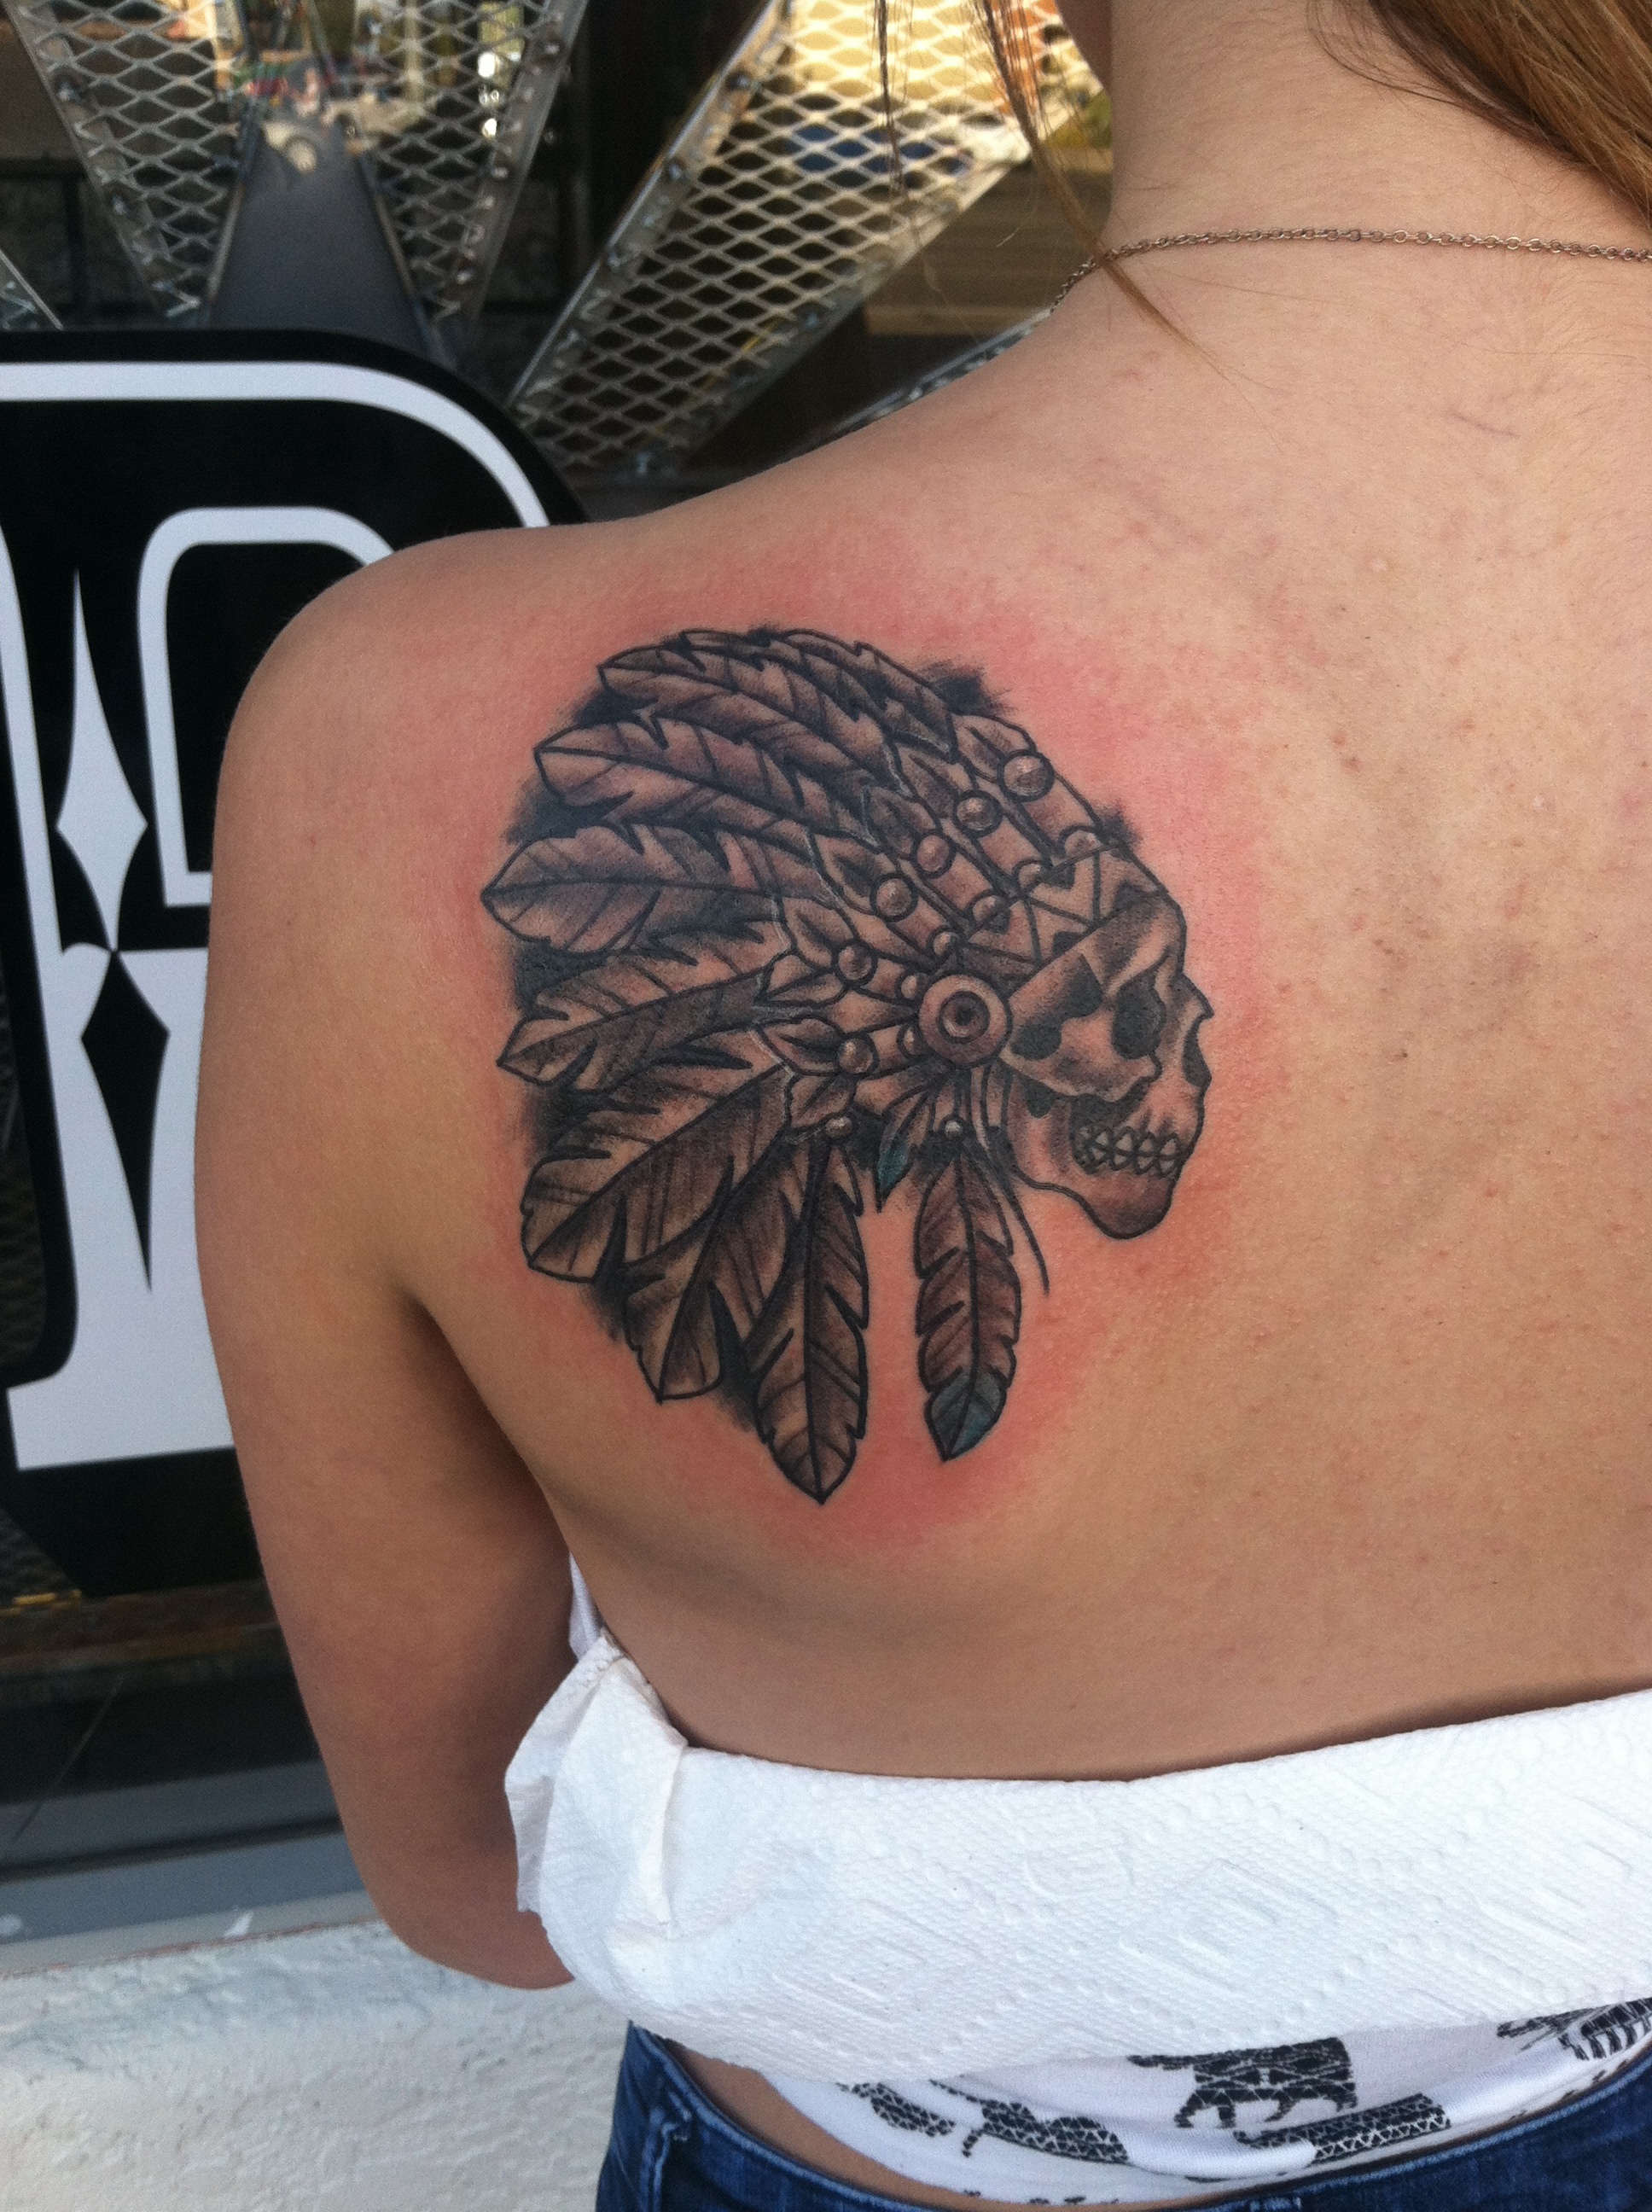 Custom black and grey skull with headdress native girl back tattoo by david meek of fast lane tattoo in tucson arizona with kingpin tattoo supply